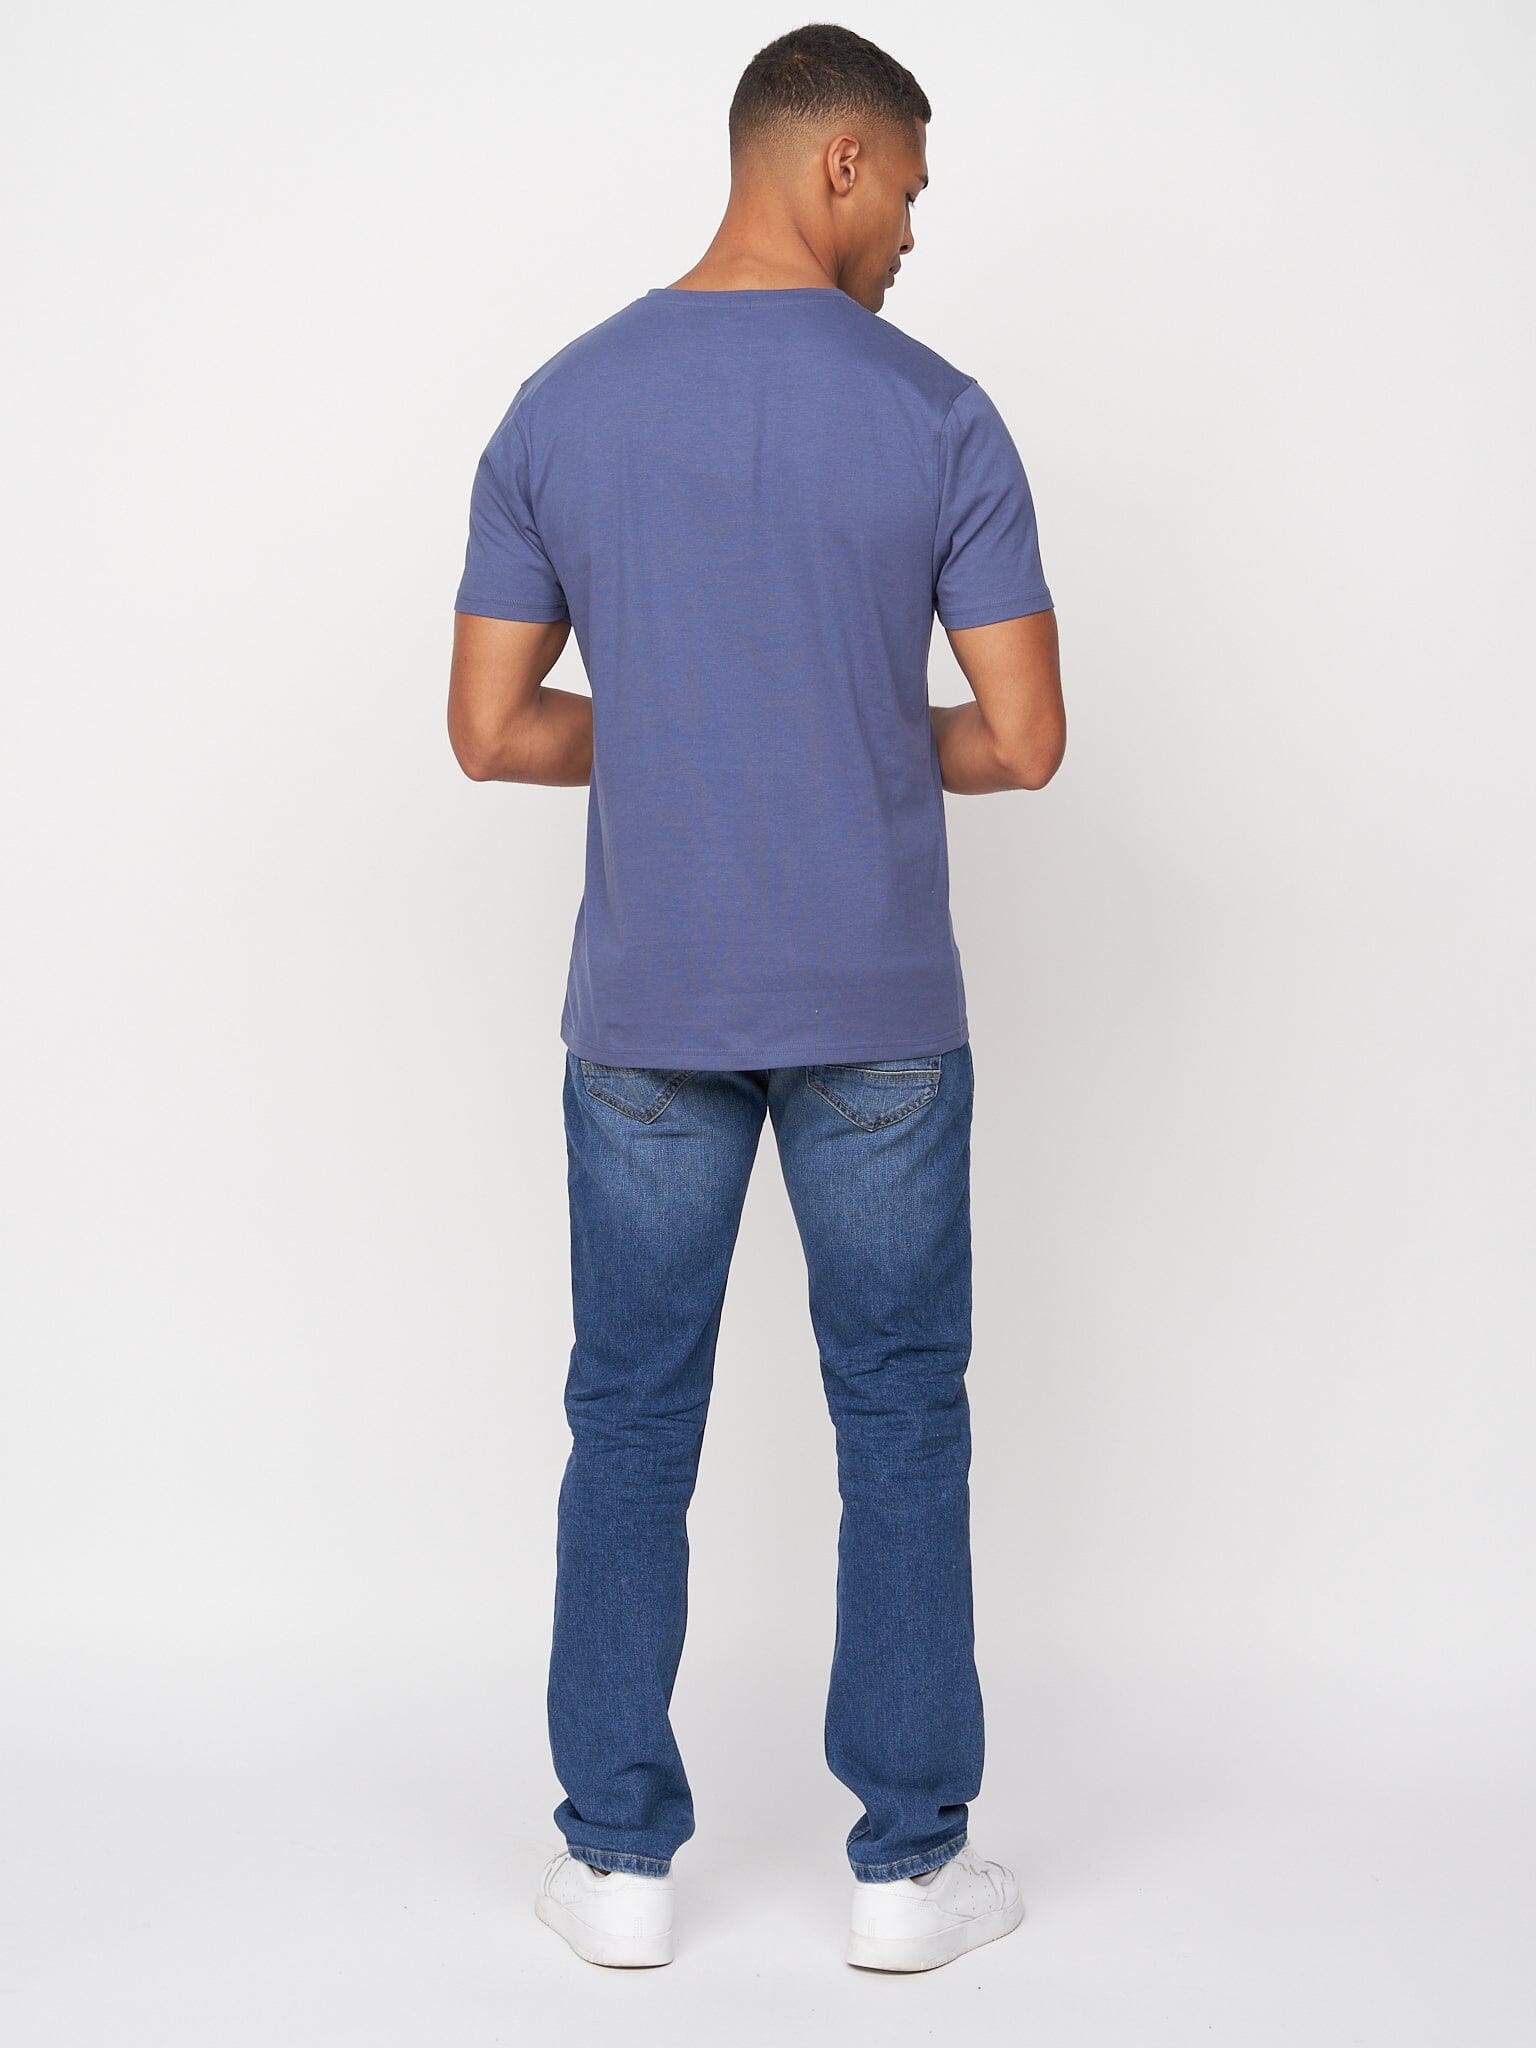 Pashka T-Shirt Denim Blue